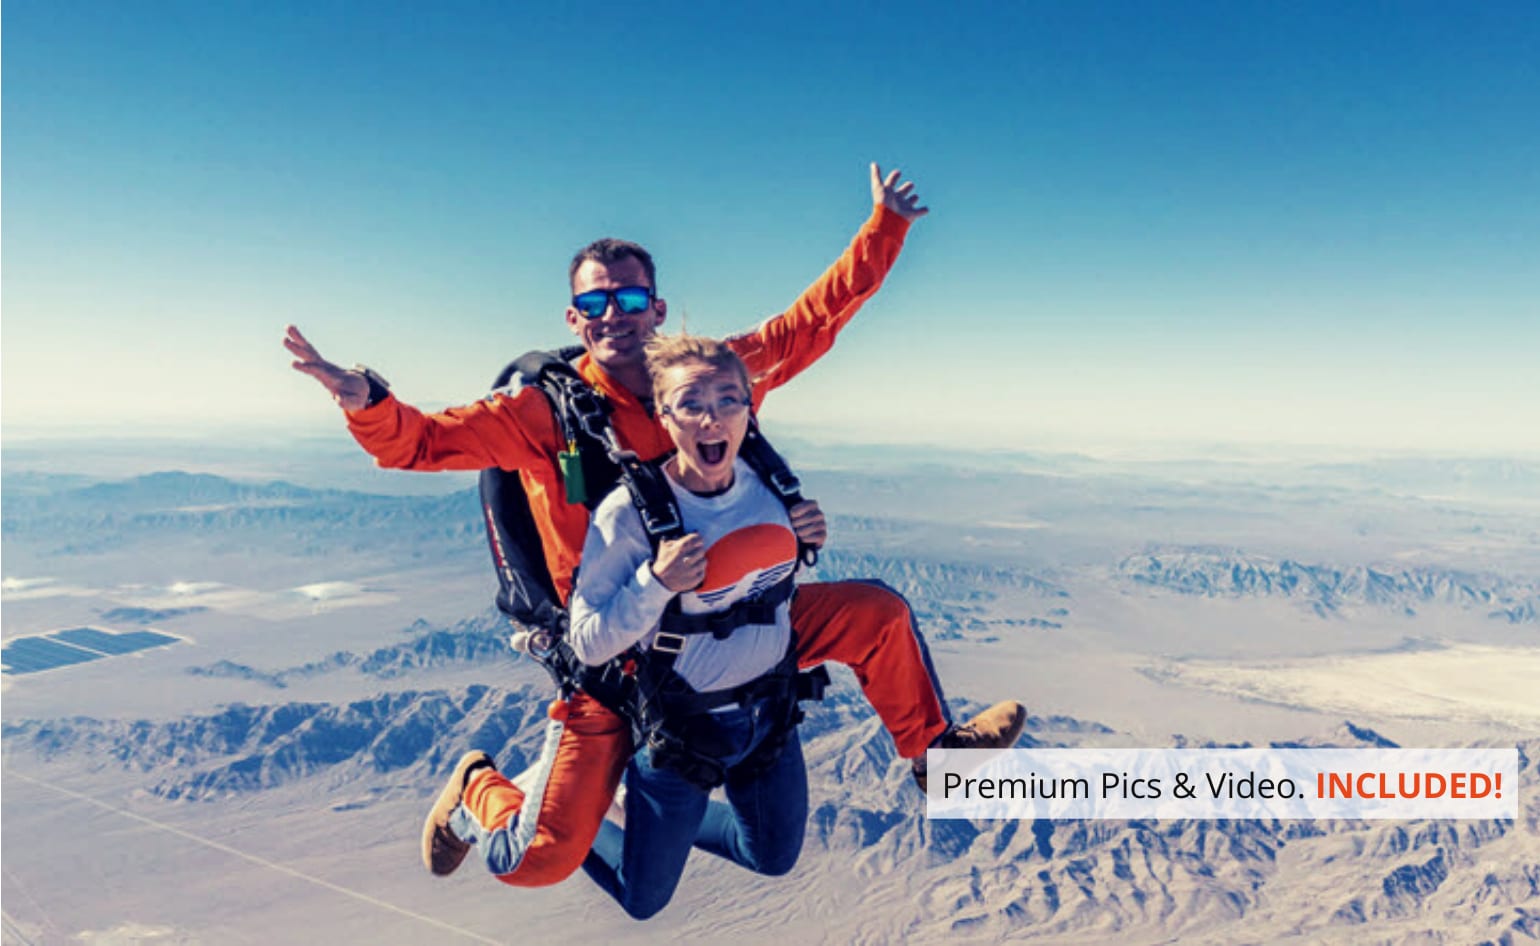 Go Jump Sky dive Las Vegas Tandem skydiving parachuting sin city go pro photo